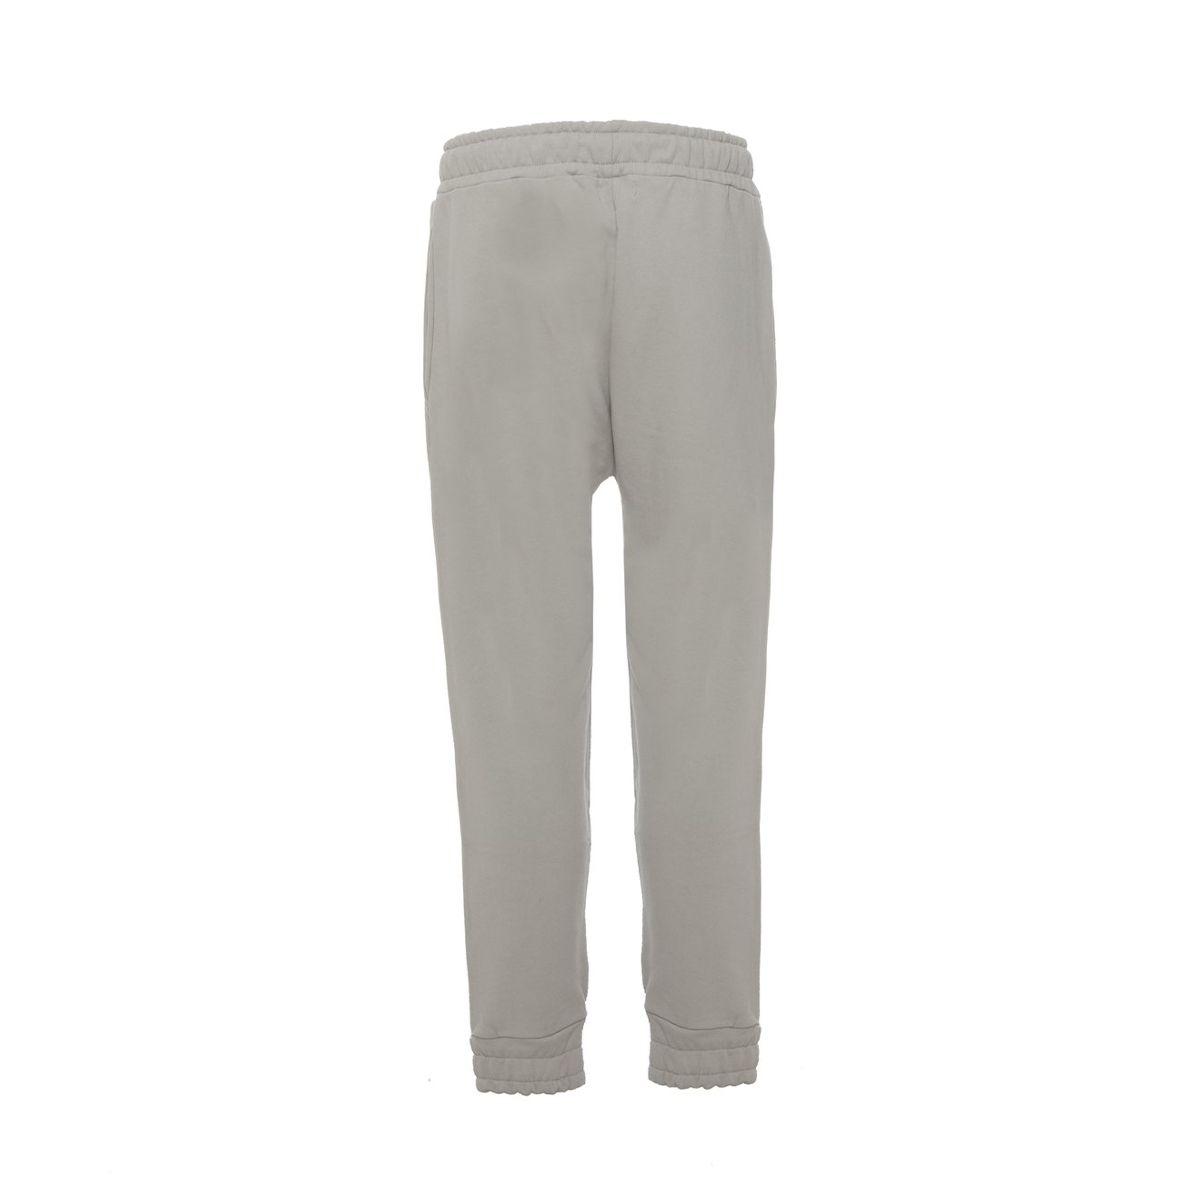 Basic Grey Jogging Pants